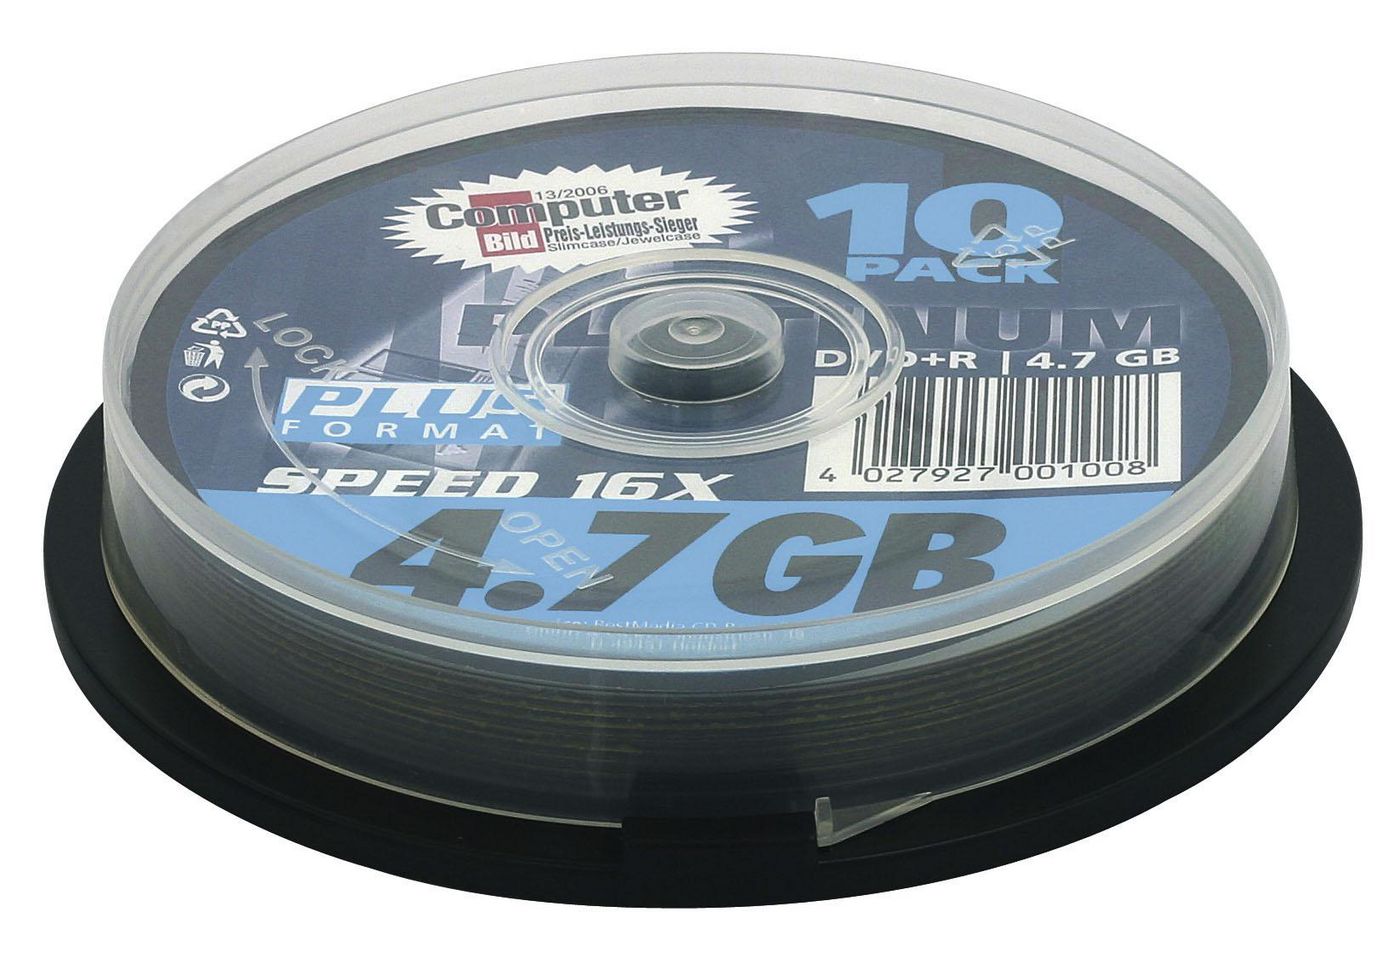 Bestmedia 100021 DVD+R 4,7GB PLAINKUM 16x Sp 10 